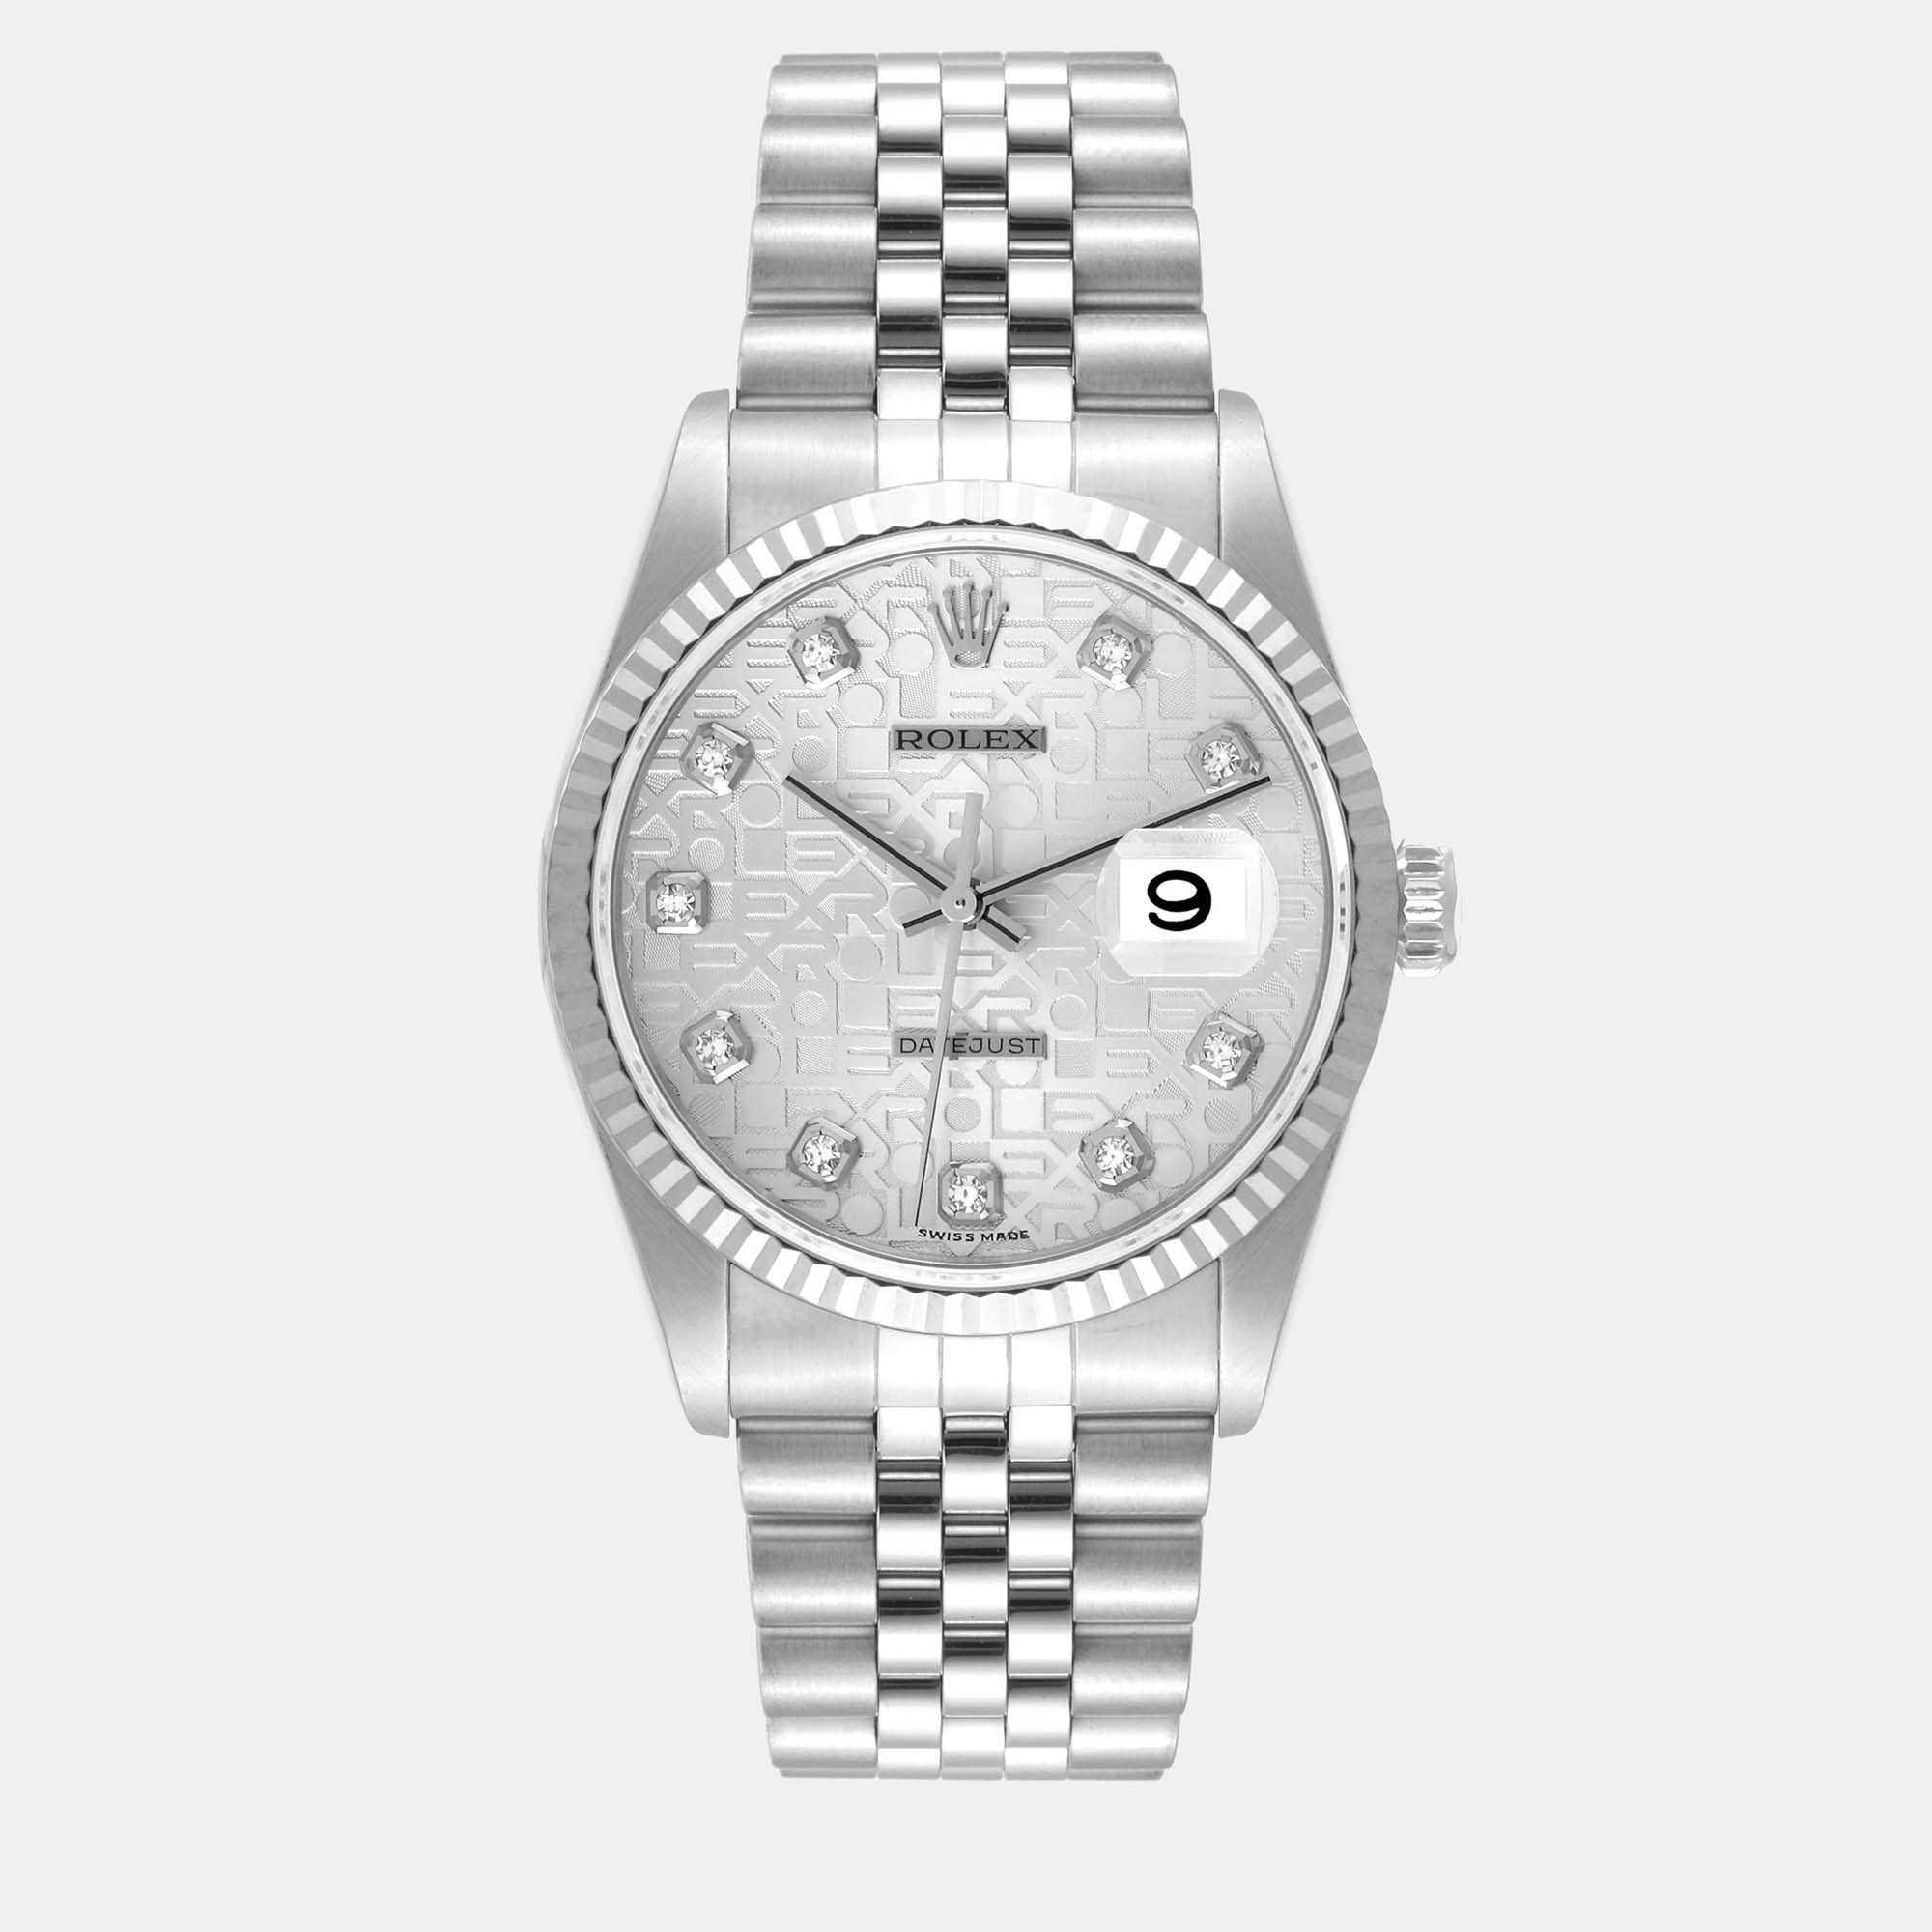 Rolex datejust steel white gold silver anniversary diamond dial mens watch 16234